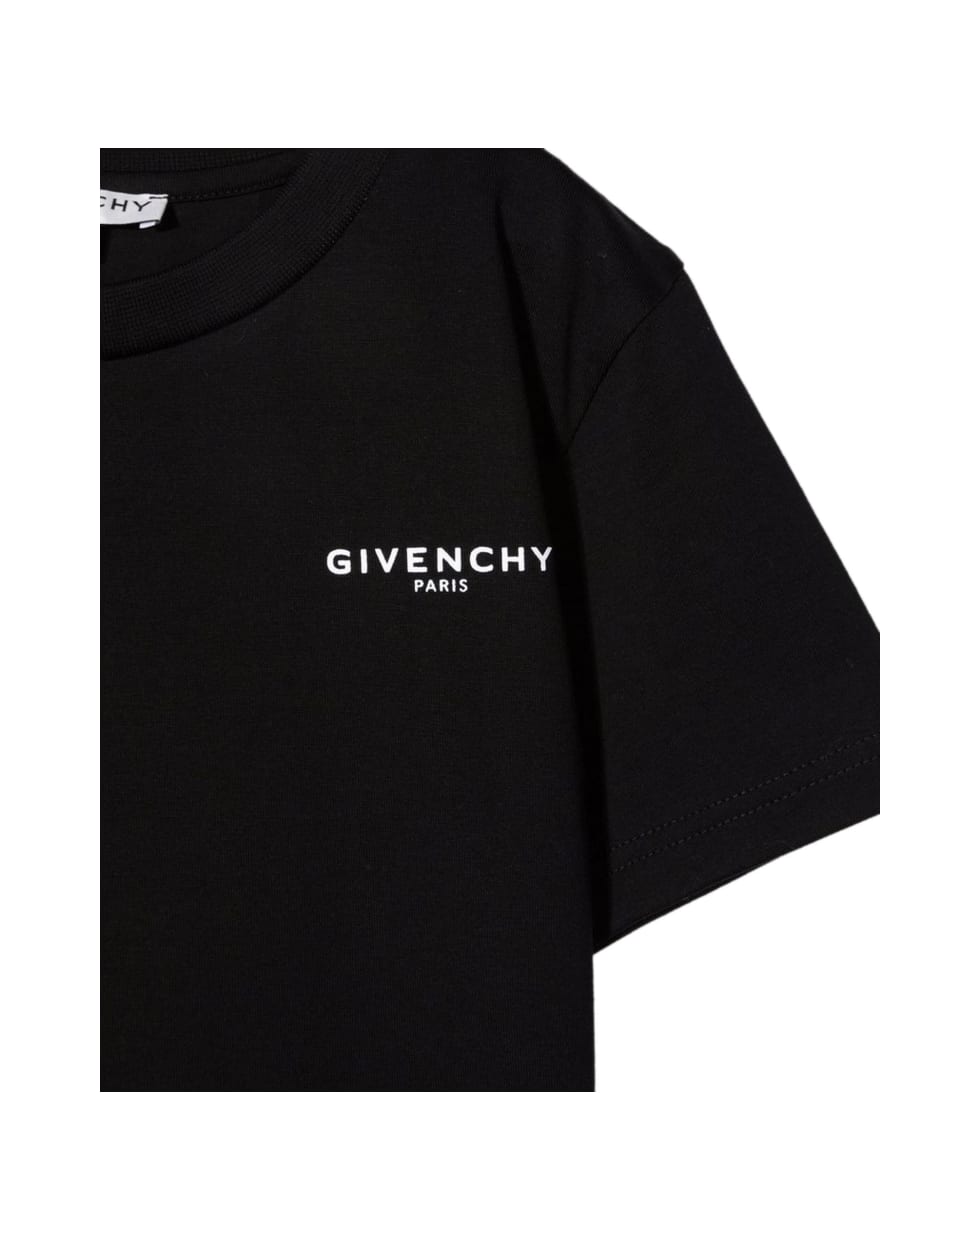 Givenchy Black Cotton T-shirt - Nero